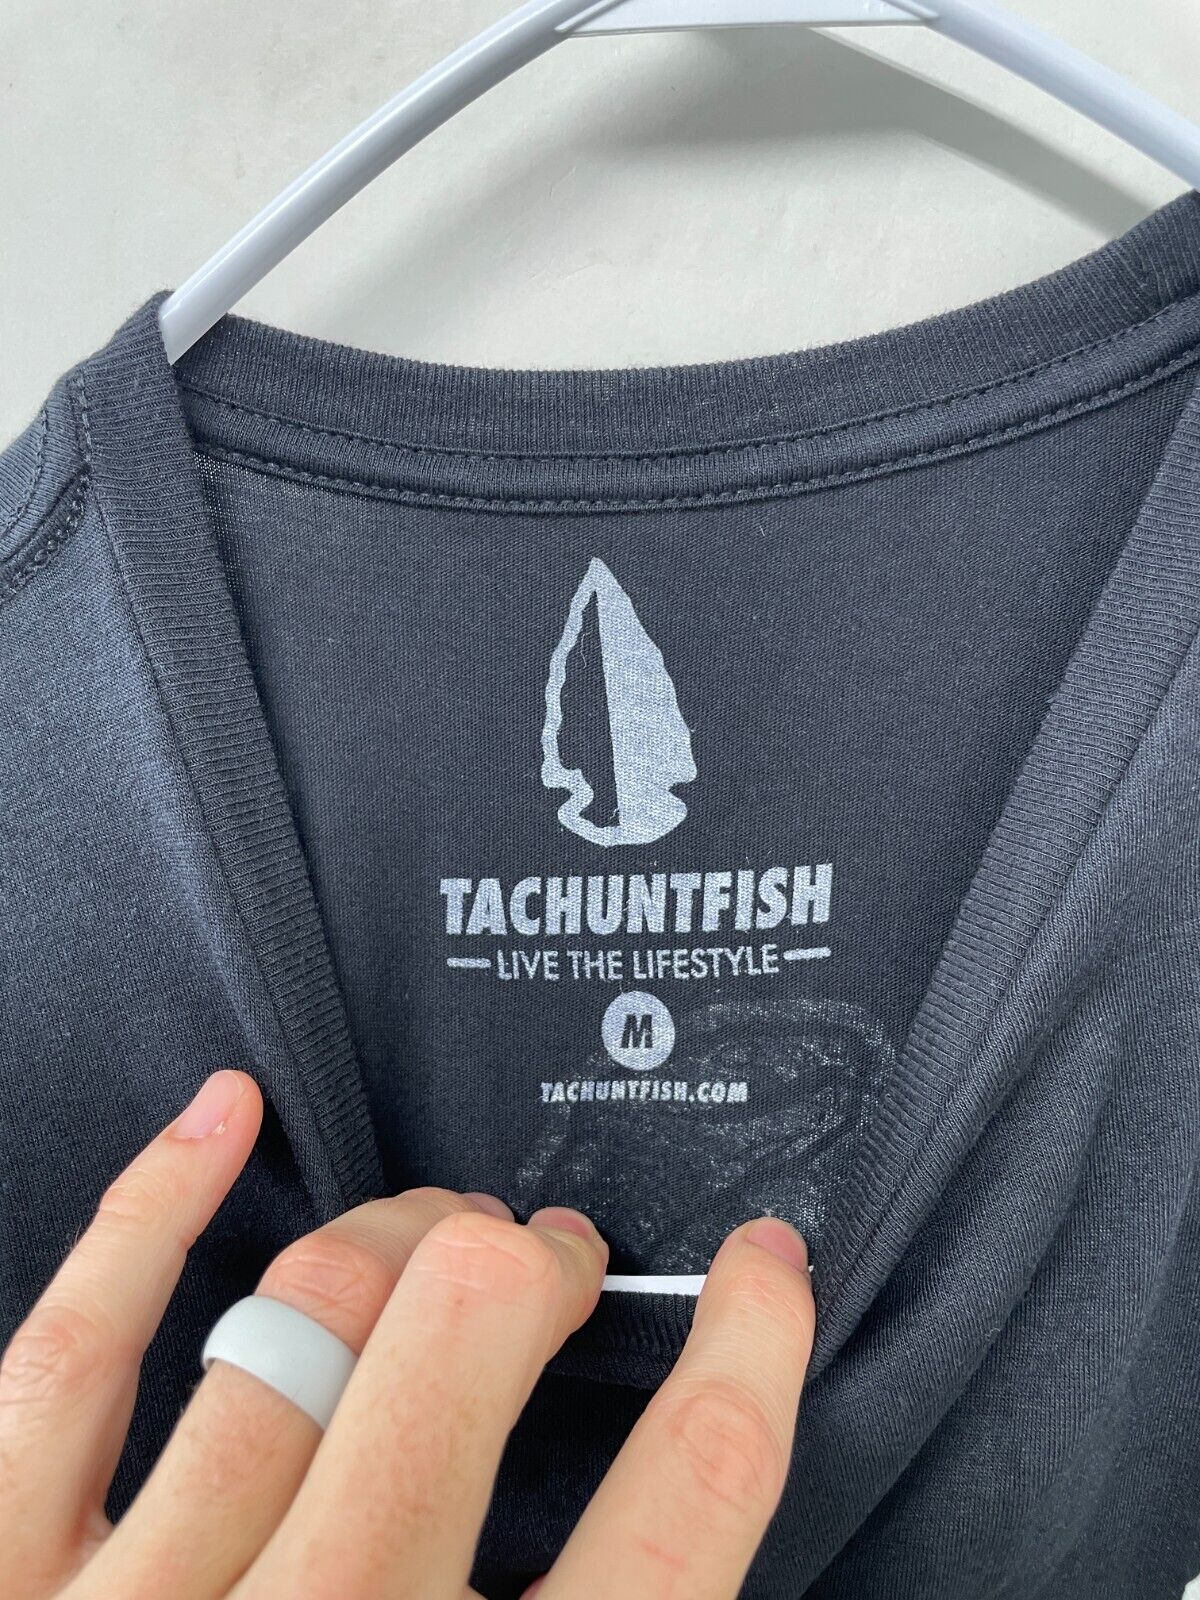 Tachunt Fish Men's M Beheaded Tee Navy Blue Medusa Tri Blend Material Casual NEW